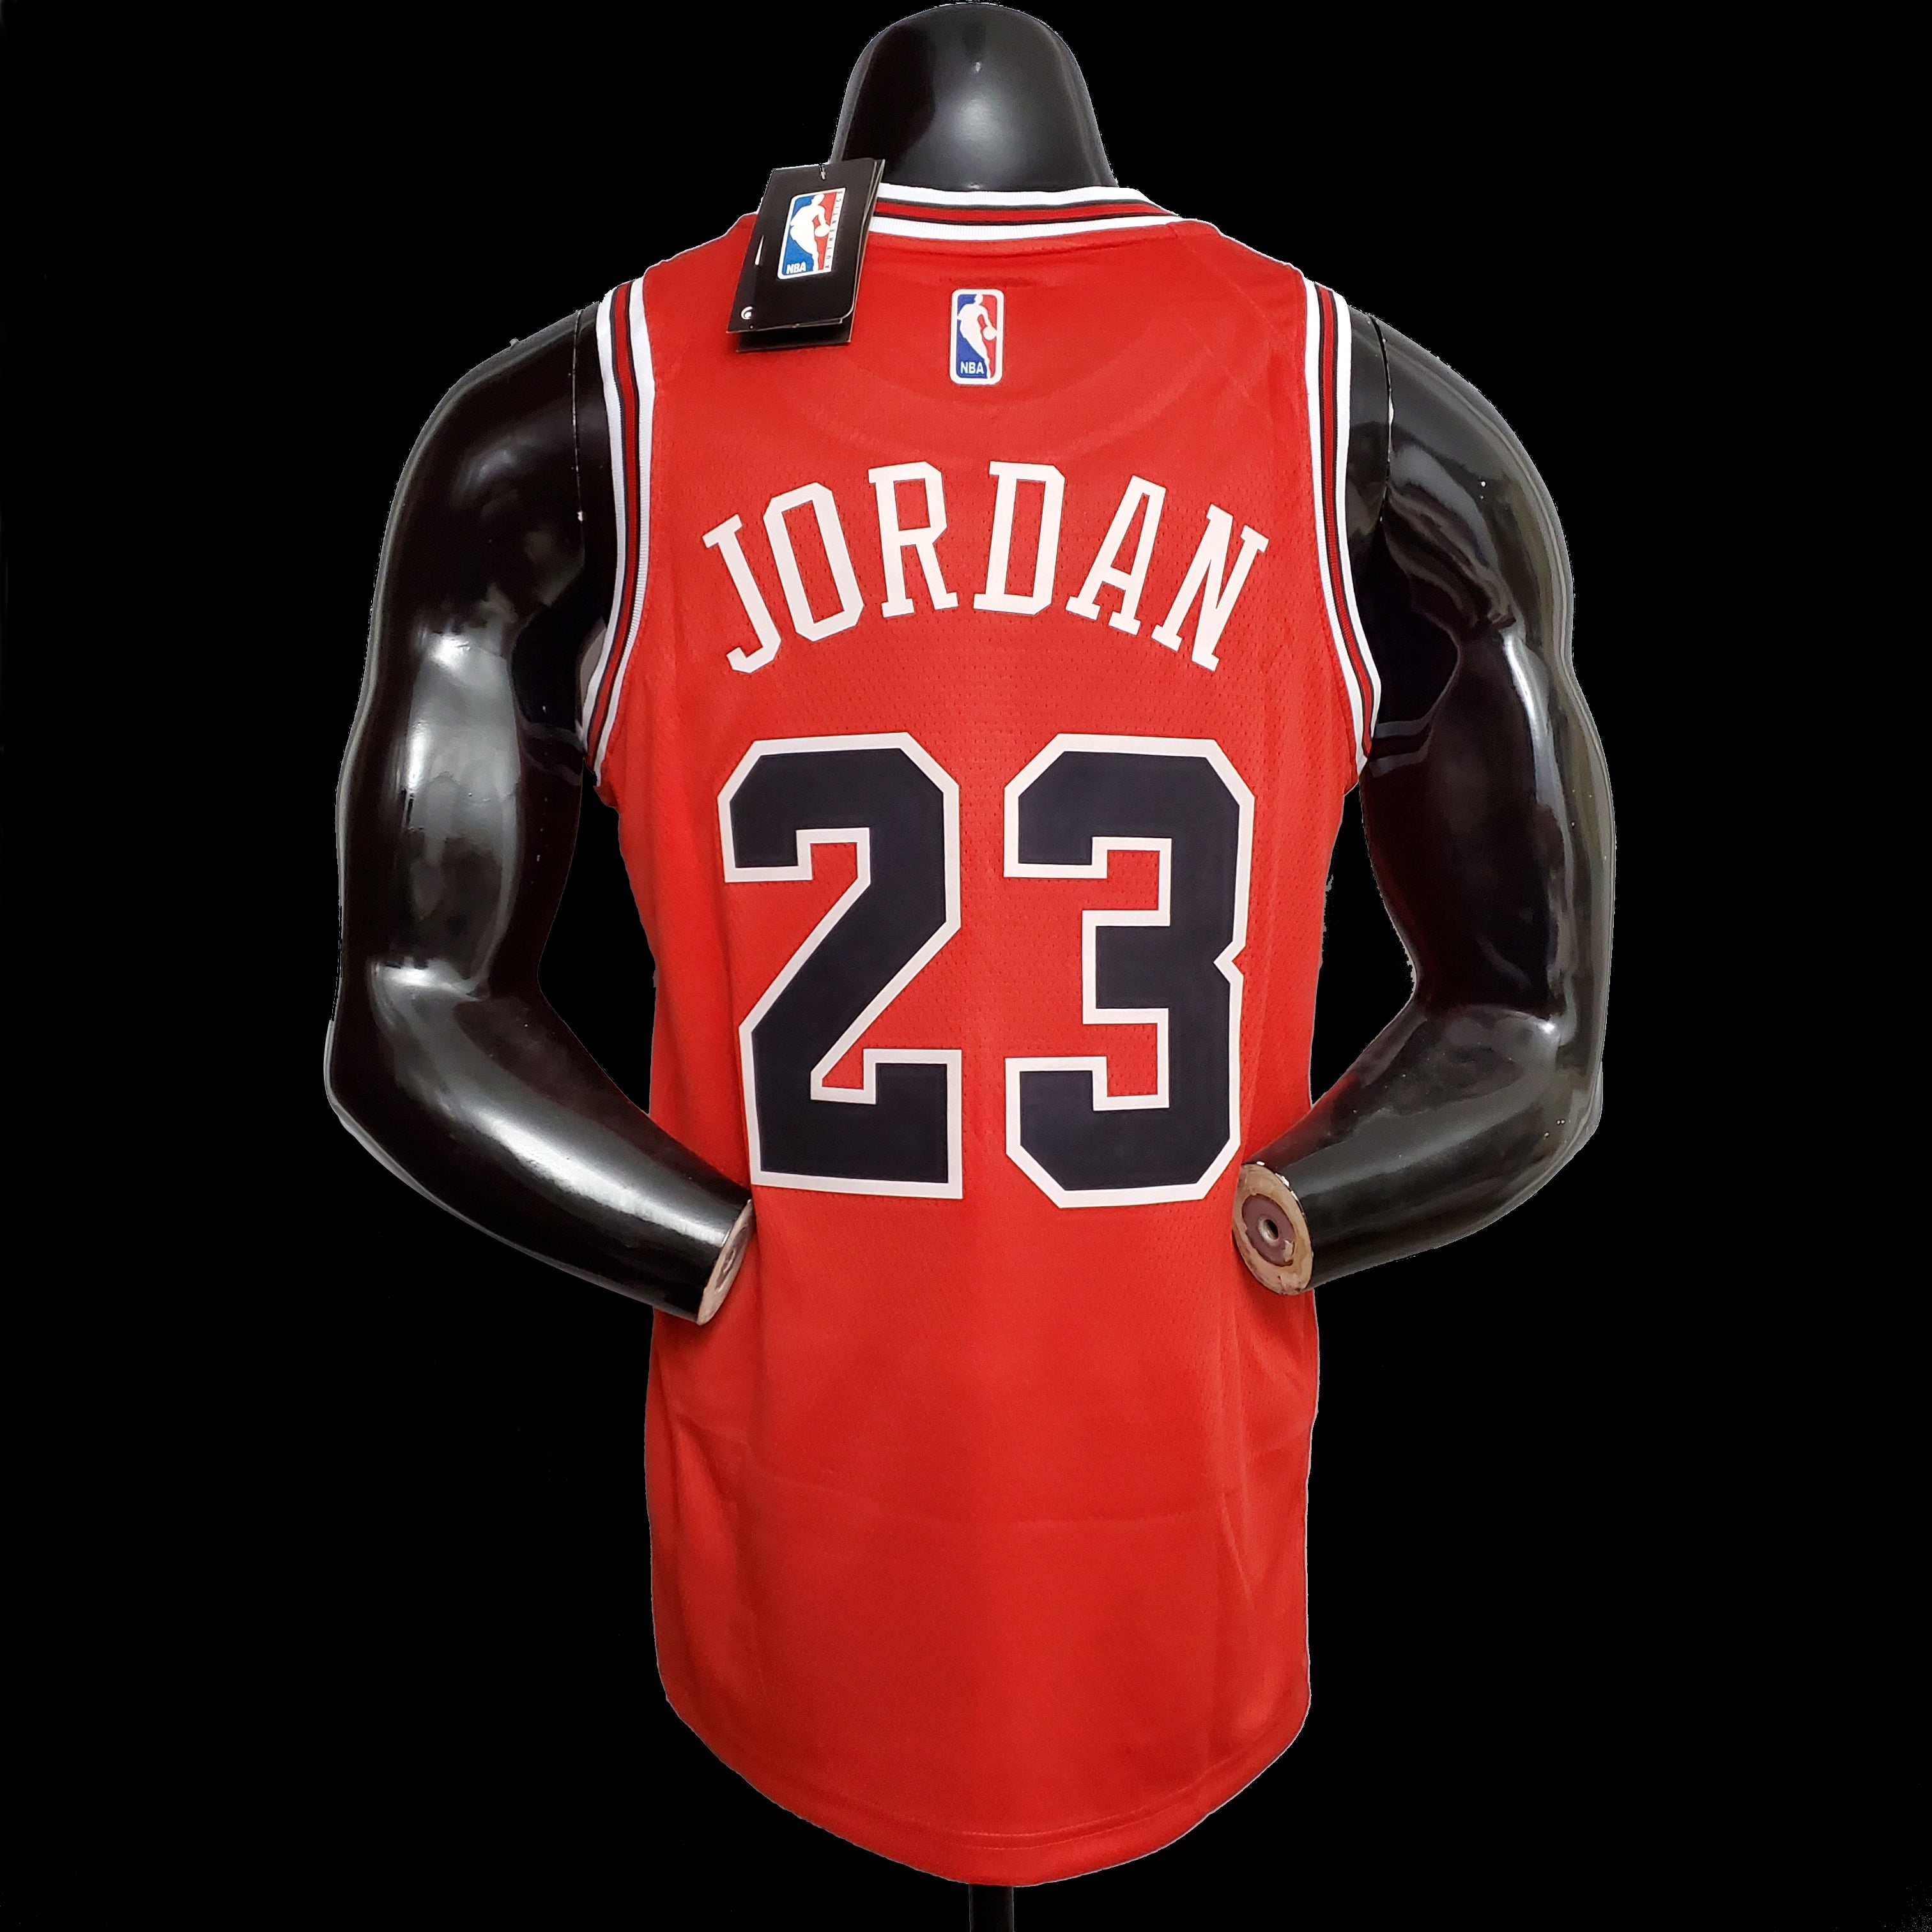 Michael Jordan #23 Chicago Bulls White Jersey  Chicago bulls, Michael  jordan jersey, Jordan jersey